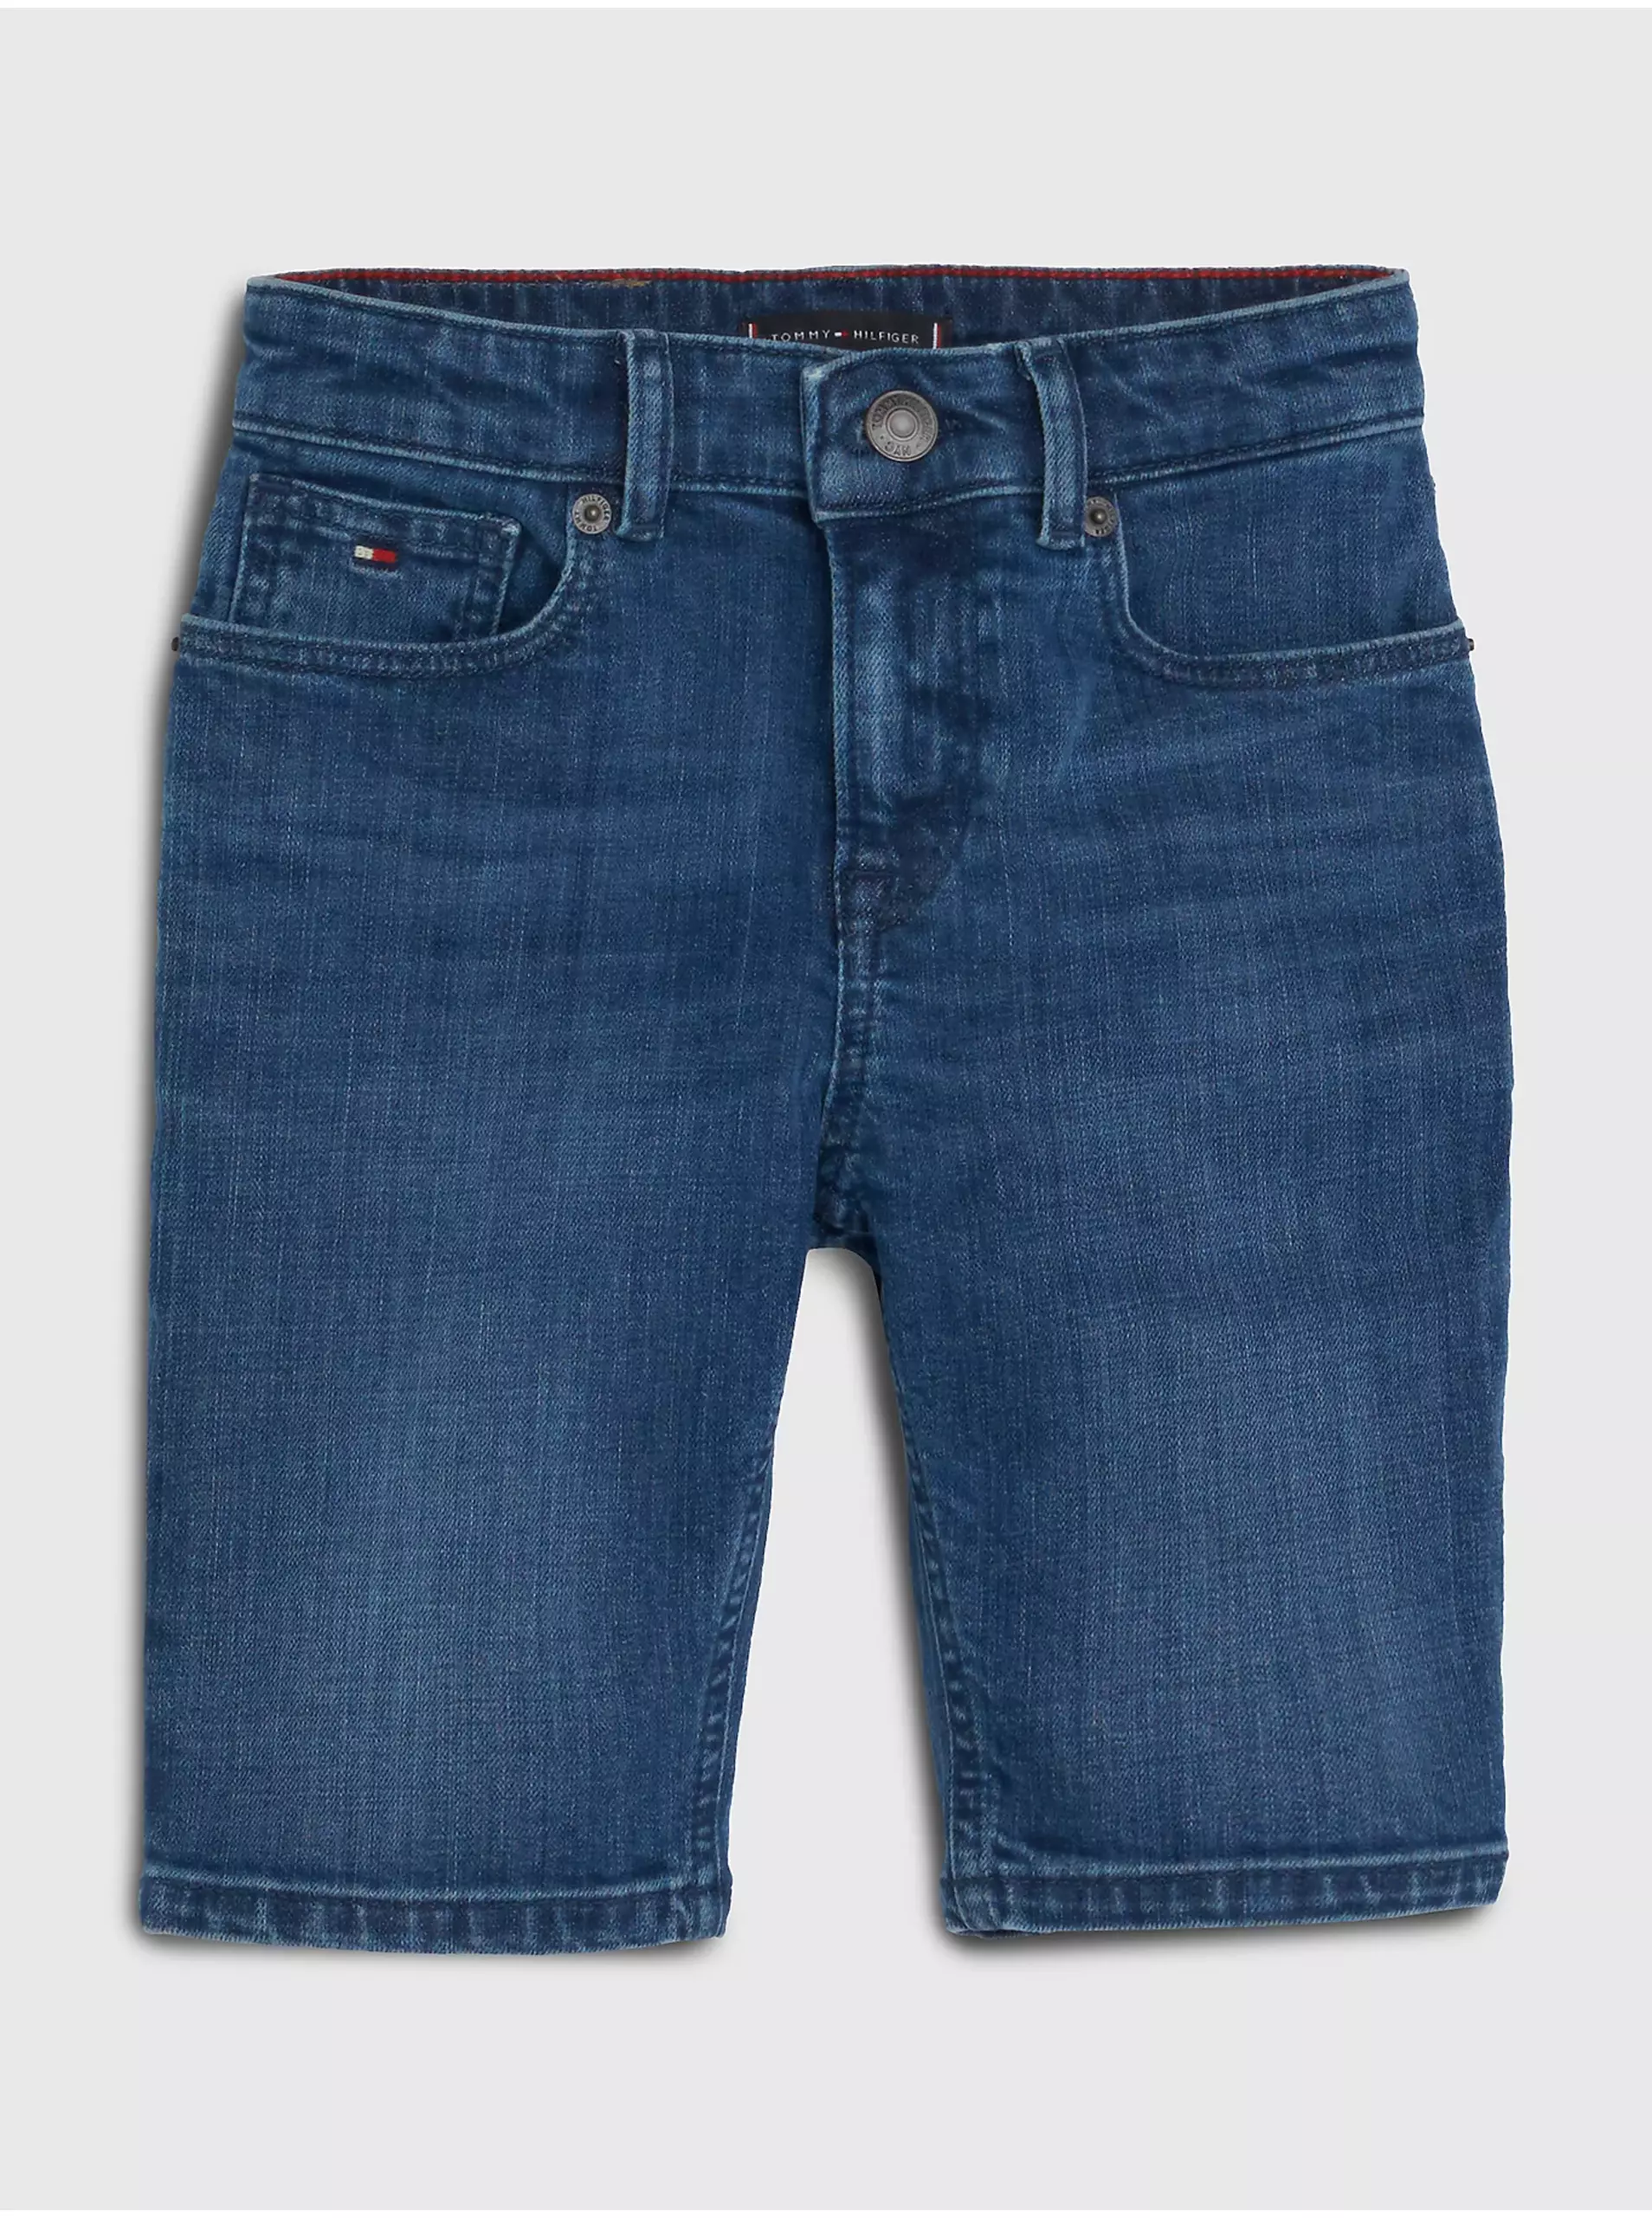 Lacno Tmavomodré chlapčenské džínsové kraťasy Tommy Hilfiger Scanton